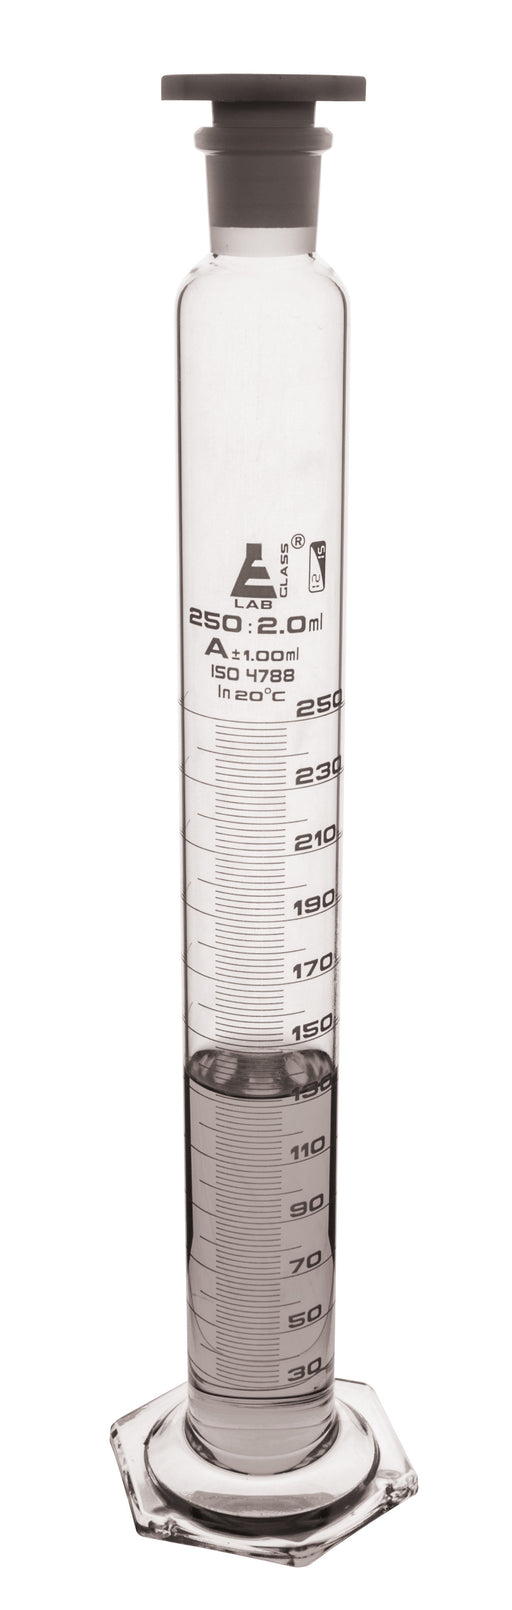 Measuring Cylinder, 250ml - Class A - 24/29 Polypropylene Stopper - Hexagonal Base, White Graduations - Borosilicate Glass - Eisco Labs